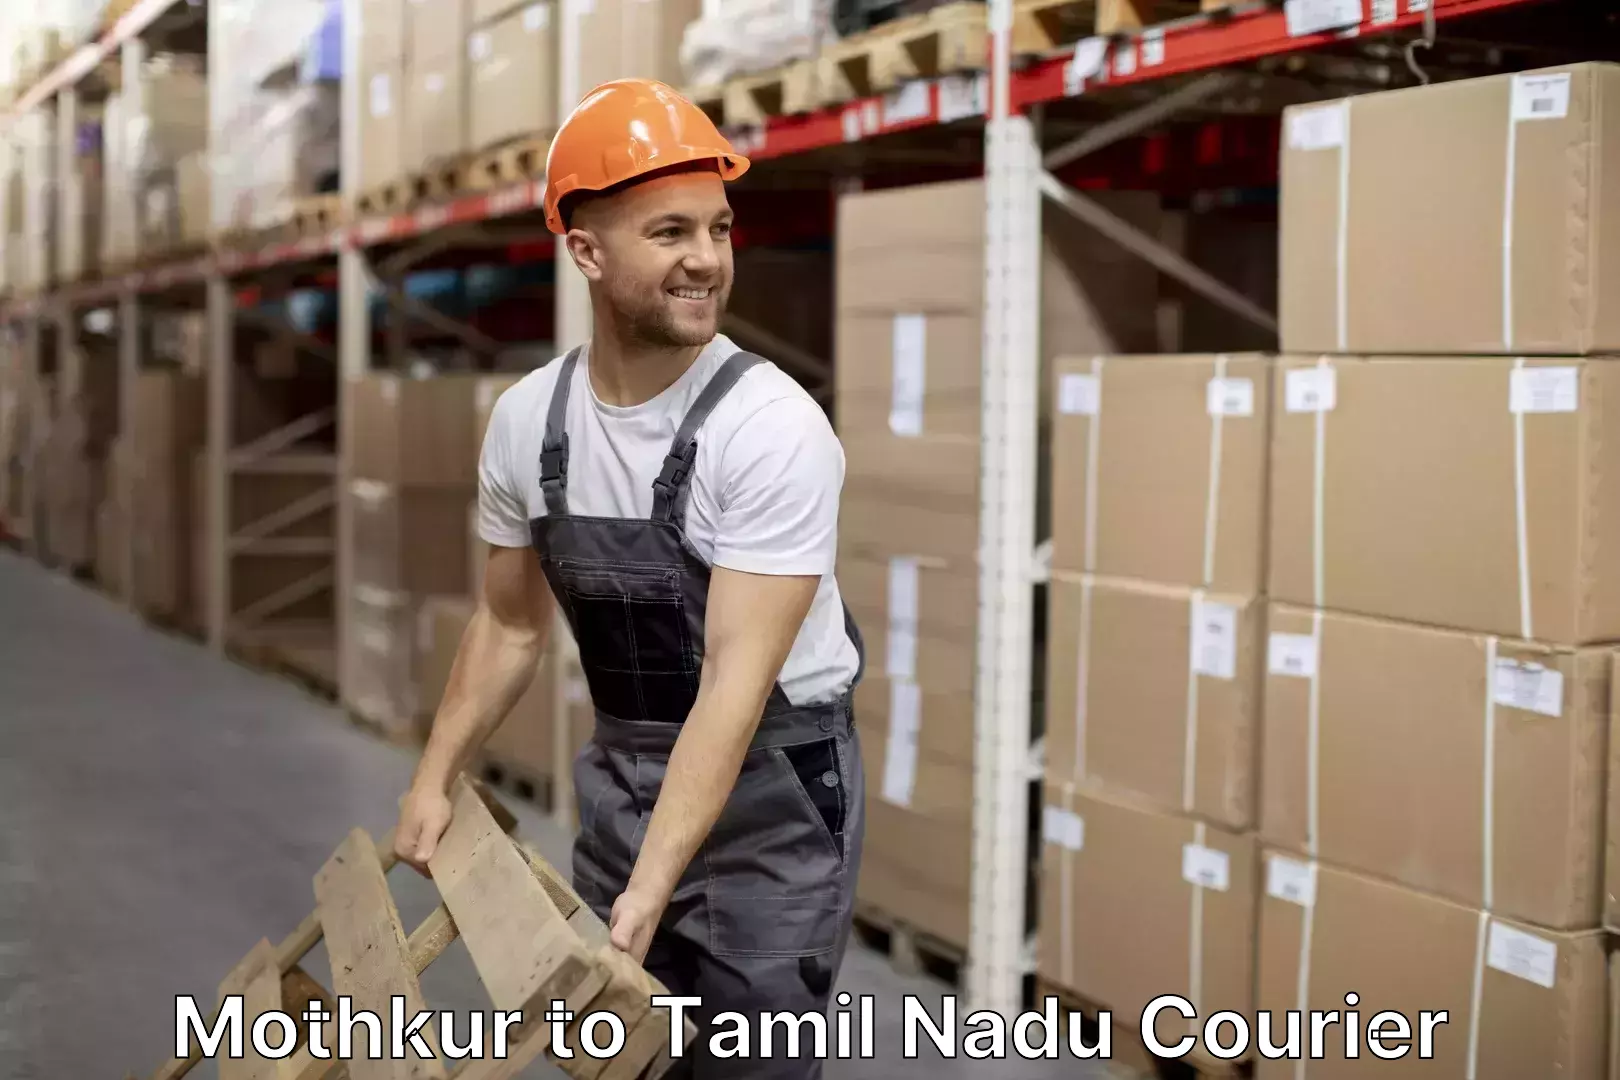 Home moving experts Mothkur to Tamil Nadu